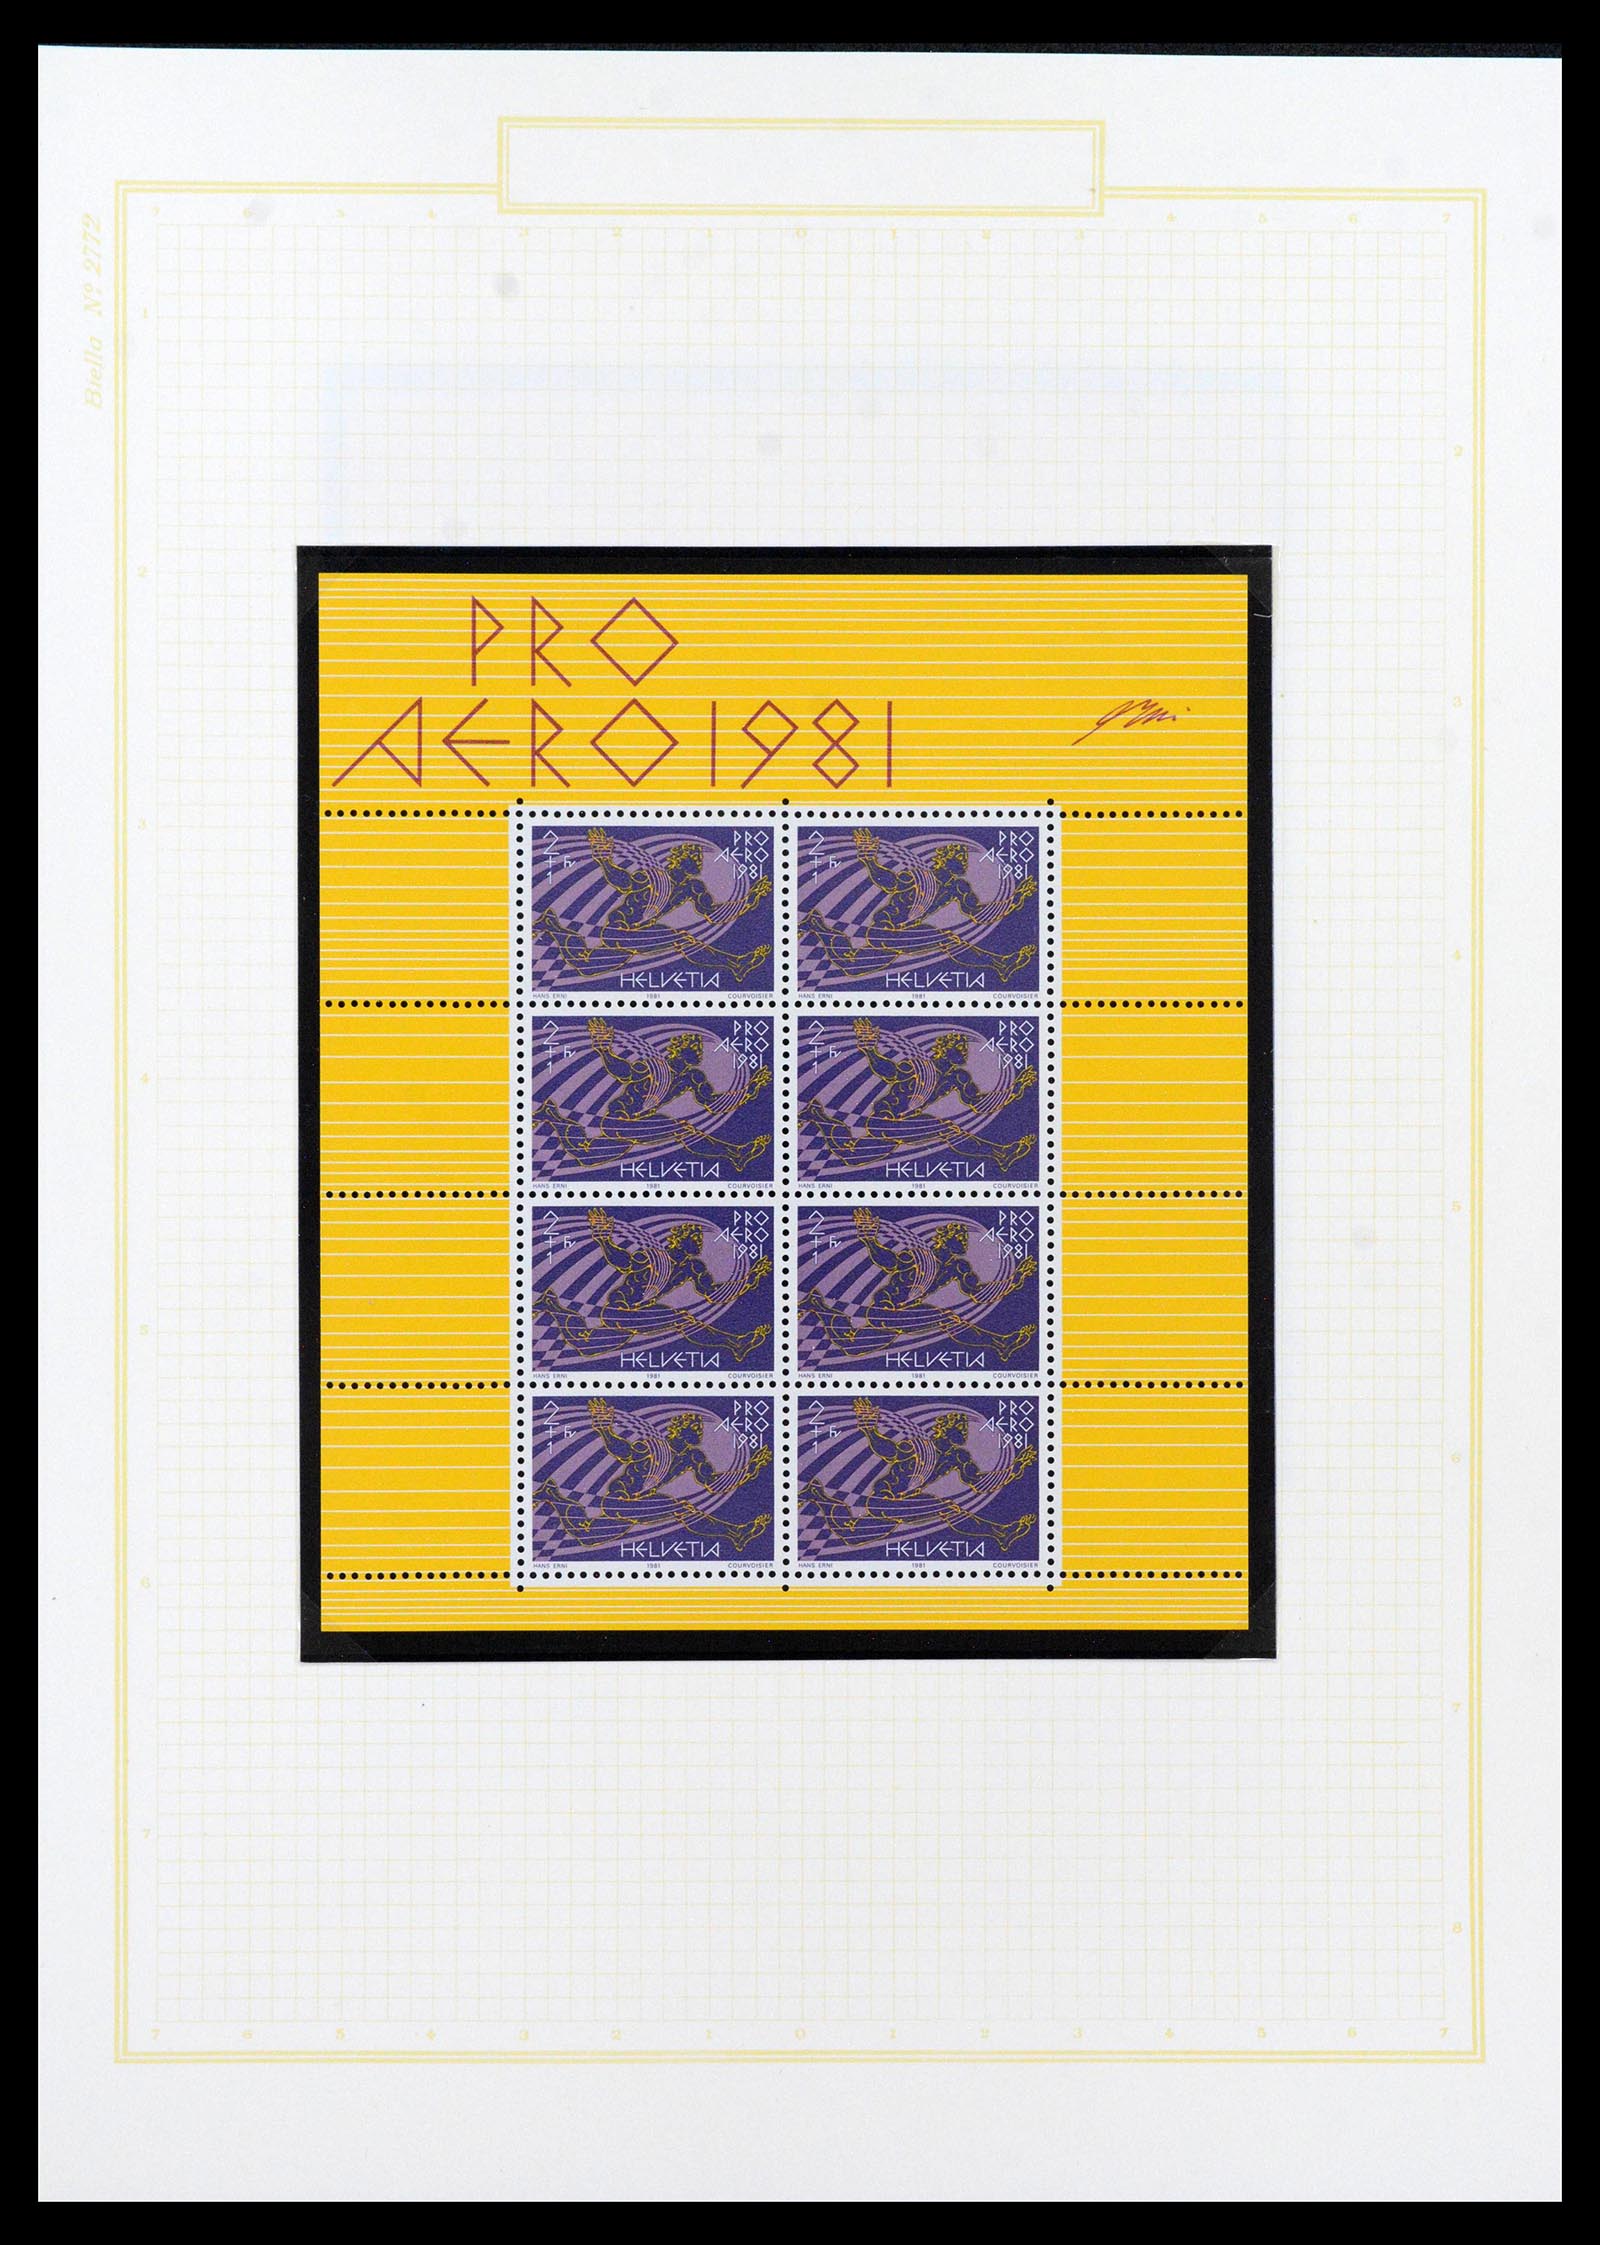 39103 0060 - Stamp collection 39103 Switzerland 1920-1988.